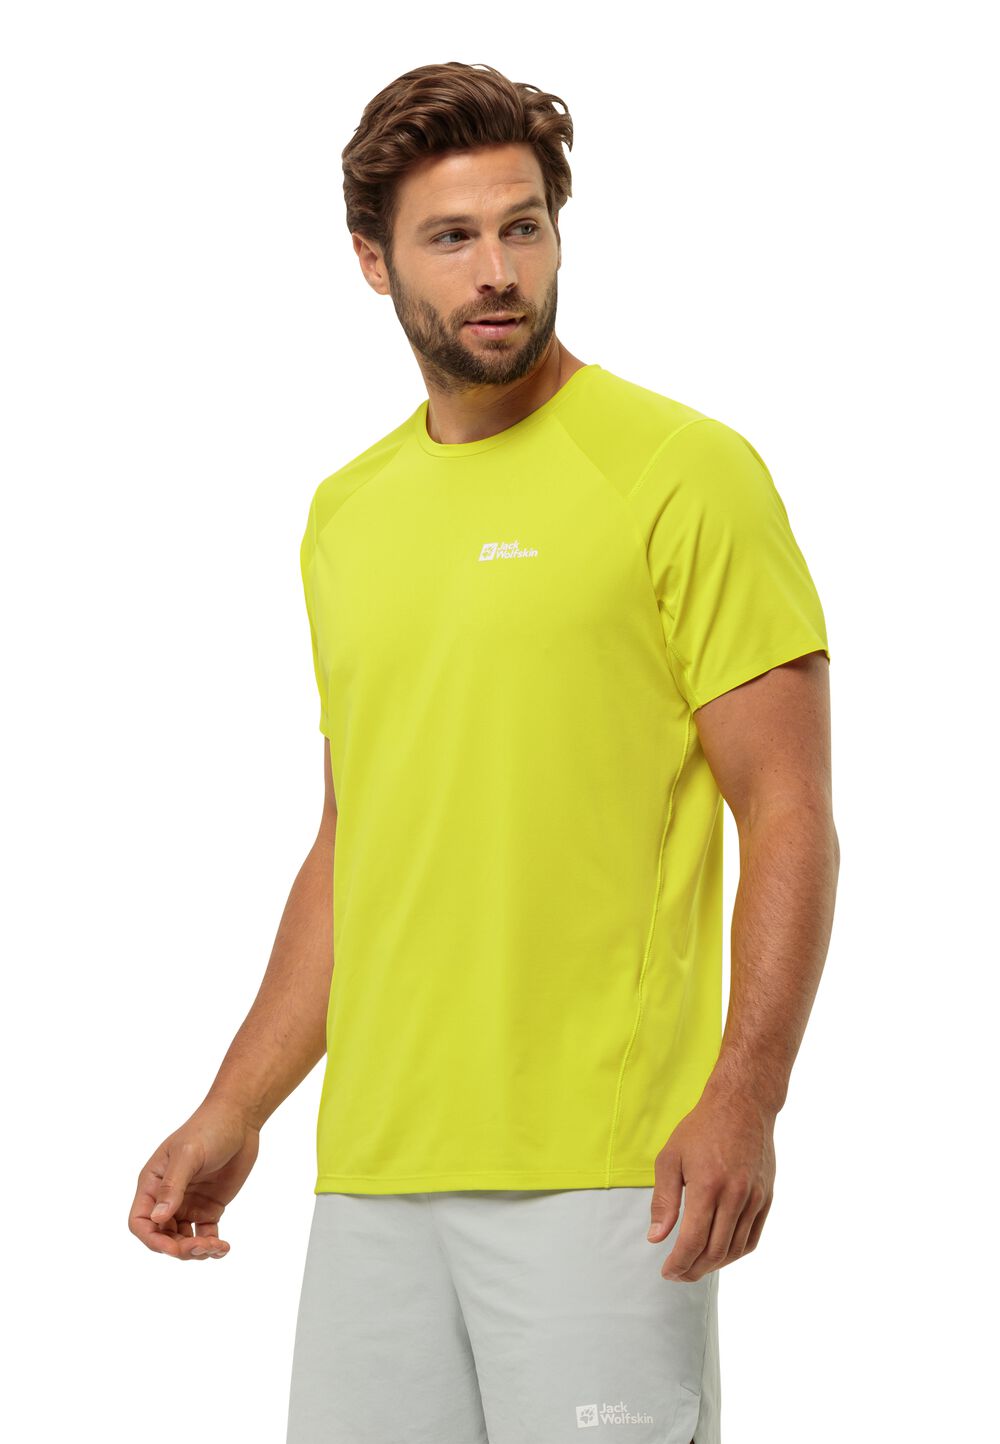 Jack Wolfskin Prelight Chill T-Shirt Men Functioneel shirt Heren XXL oranje firefly